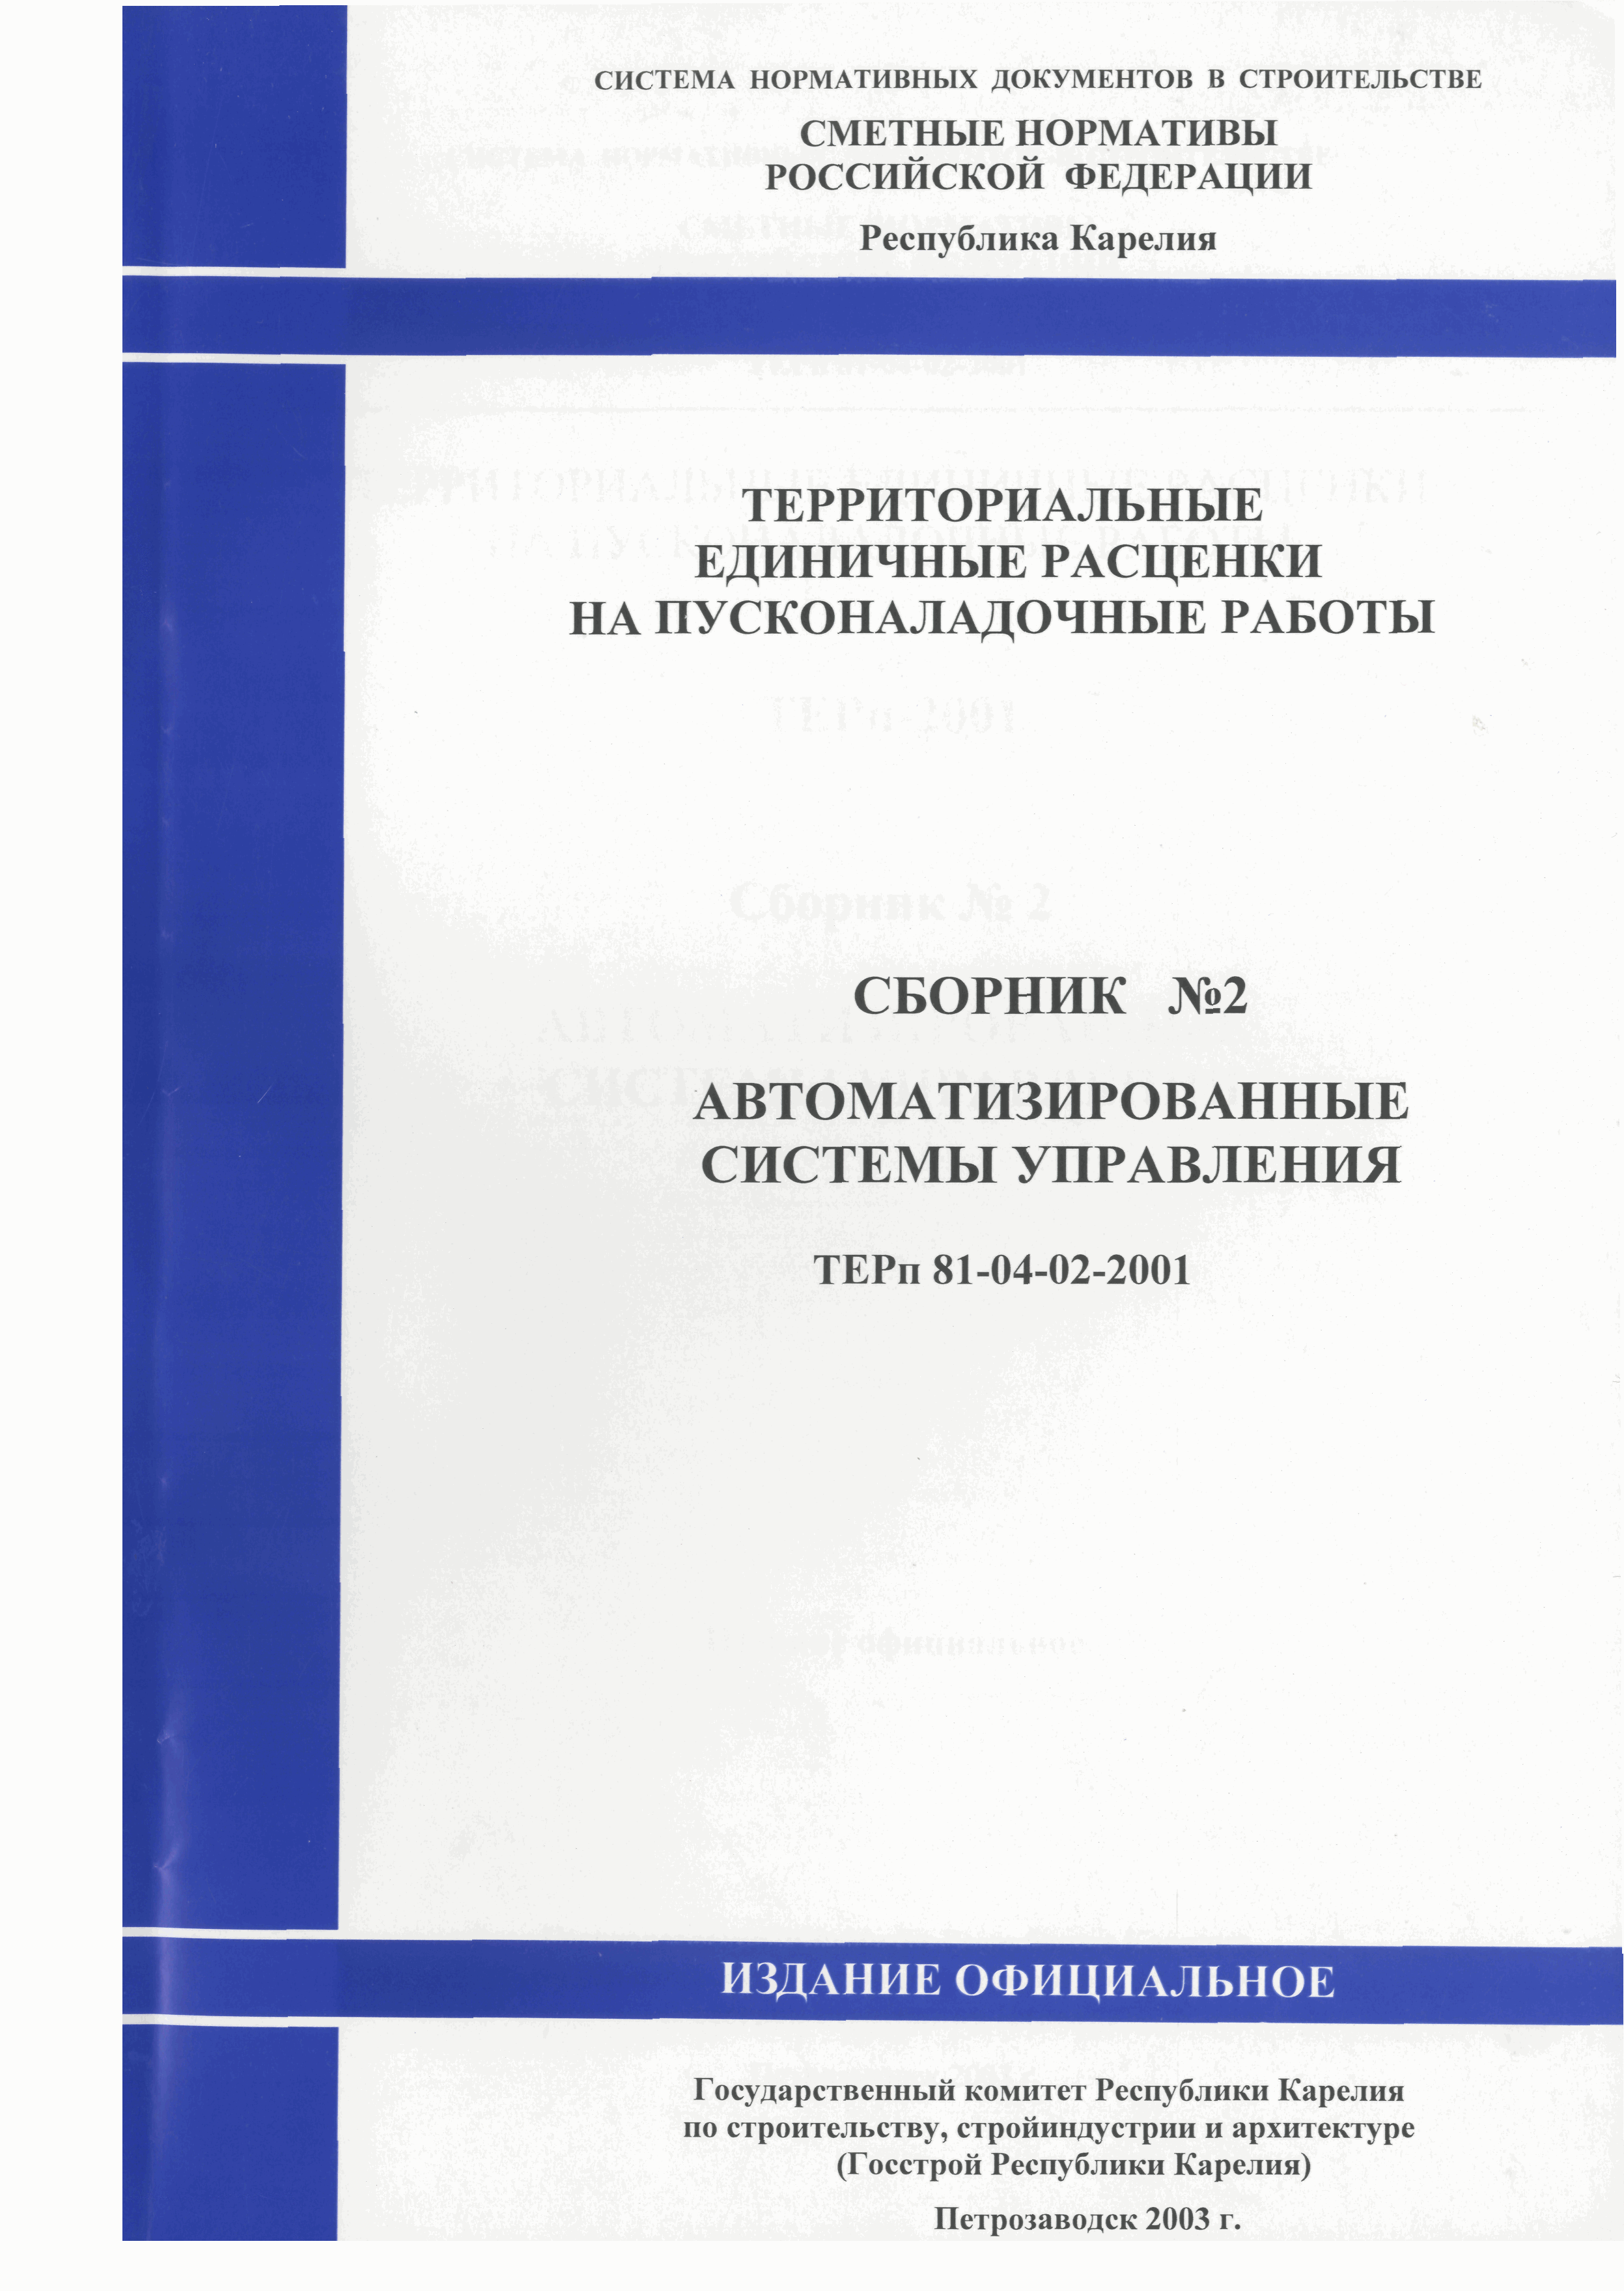 ТЕРп Республика Карелия 2001-02